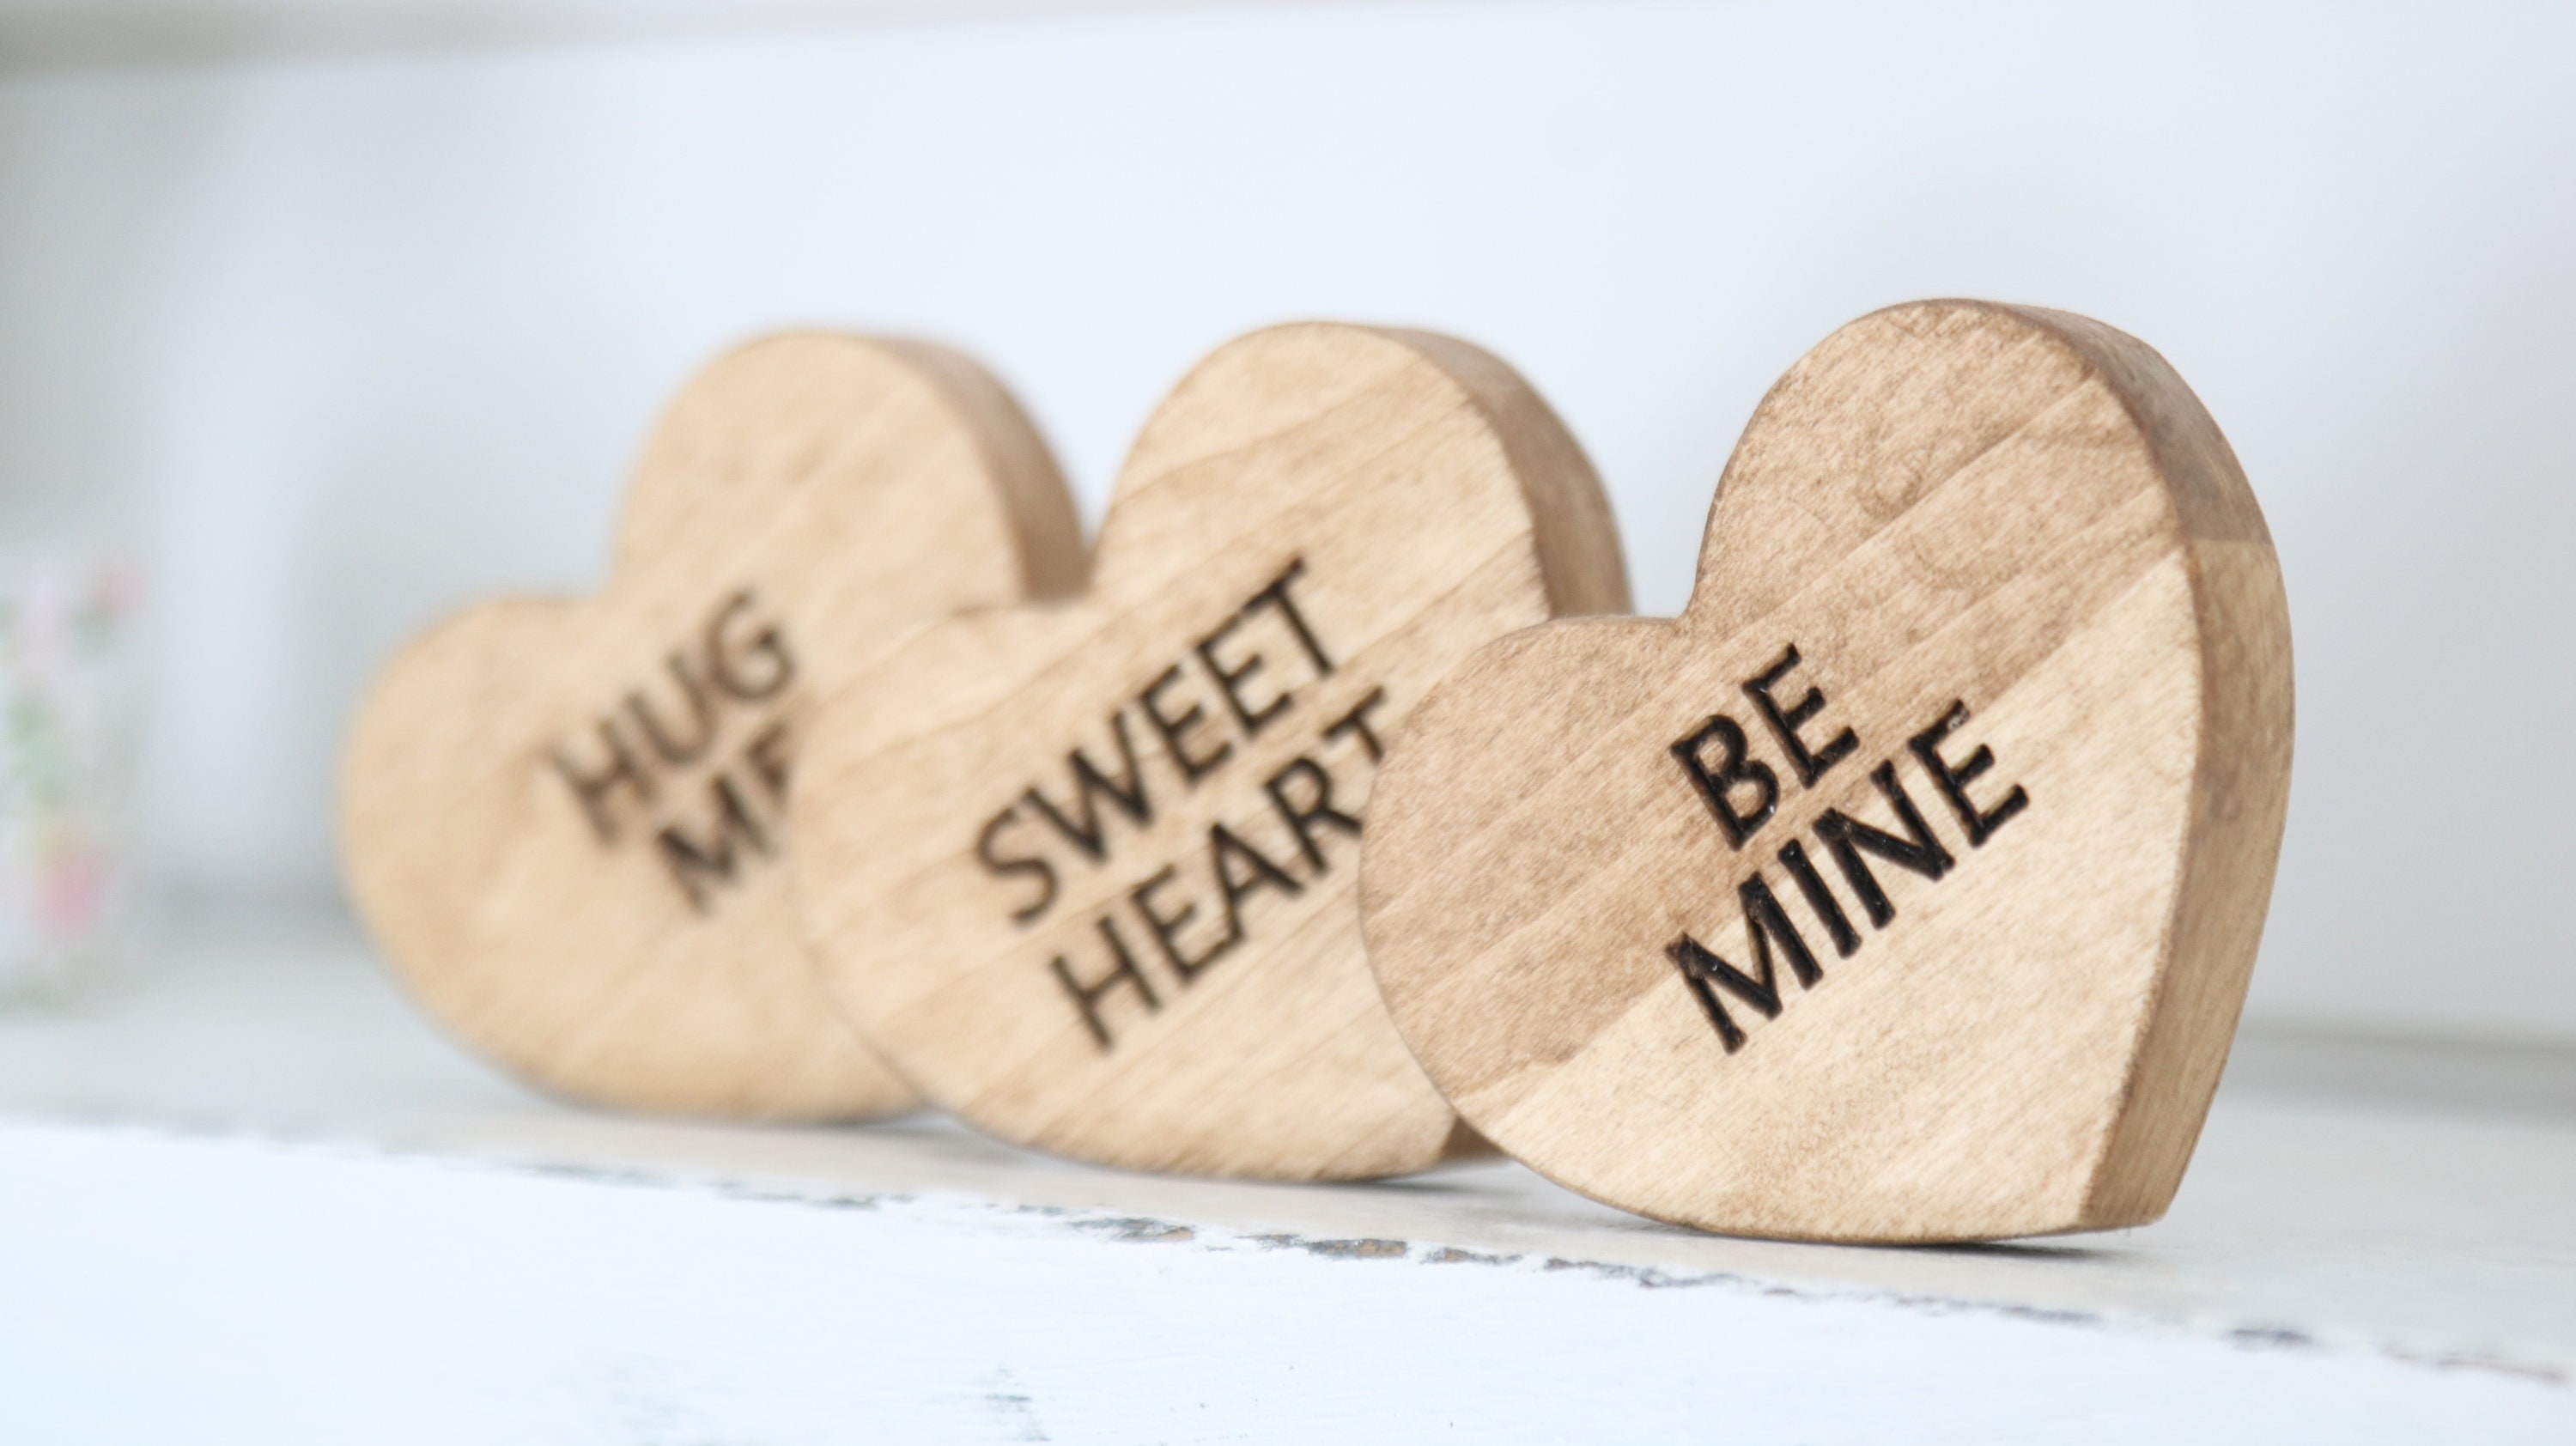 Chenille Hearts on Wooden Stand / Valentine Fabric Hearts / Valentine  Mantel Decor / Rustic Valentine's / Farmhouse Valentine's Decor / 